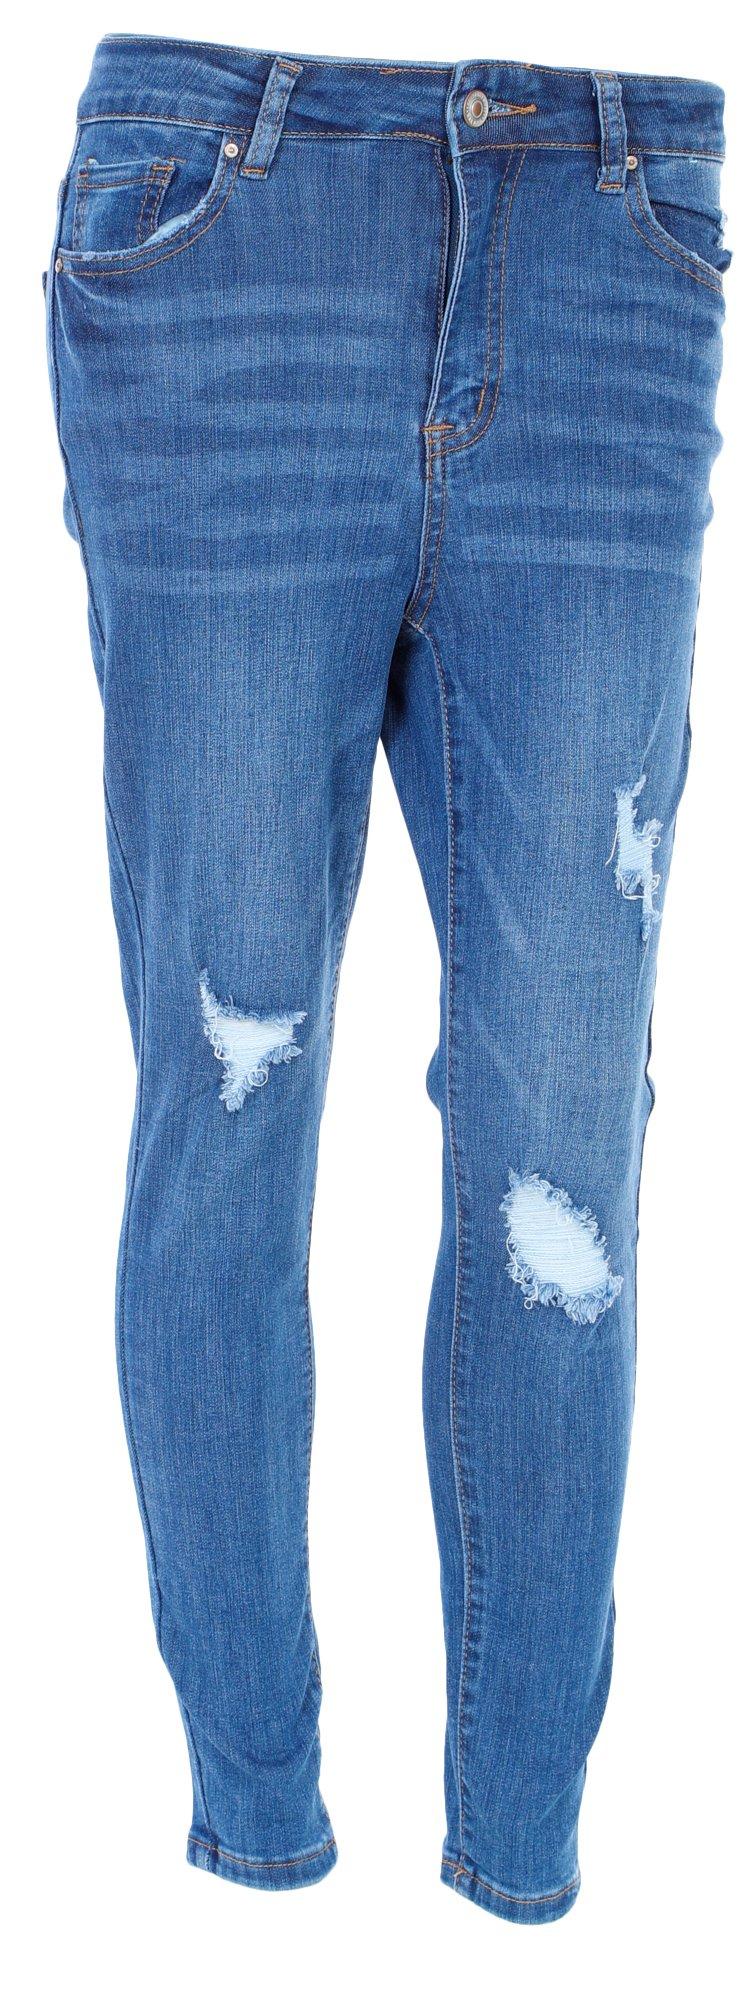 Juniors Distressed Skinny Jeans